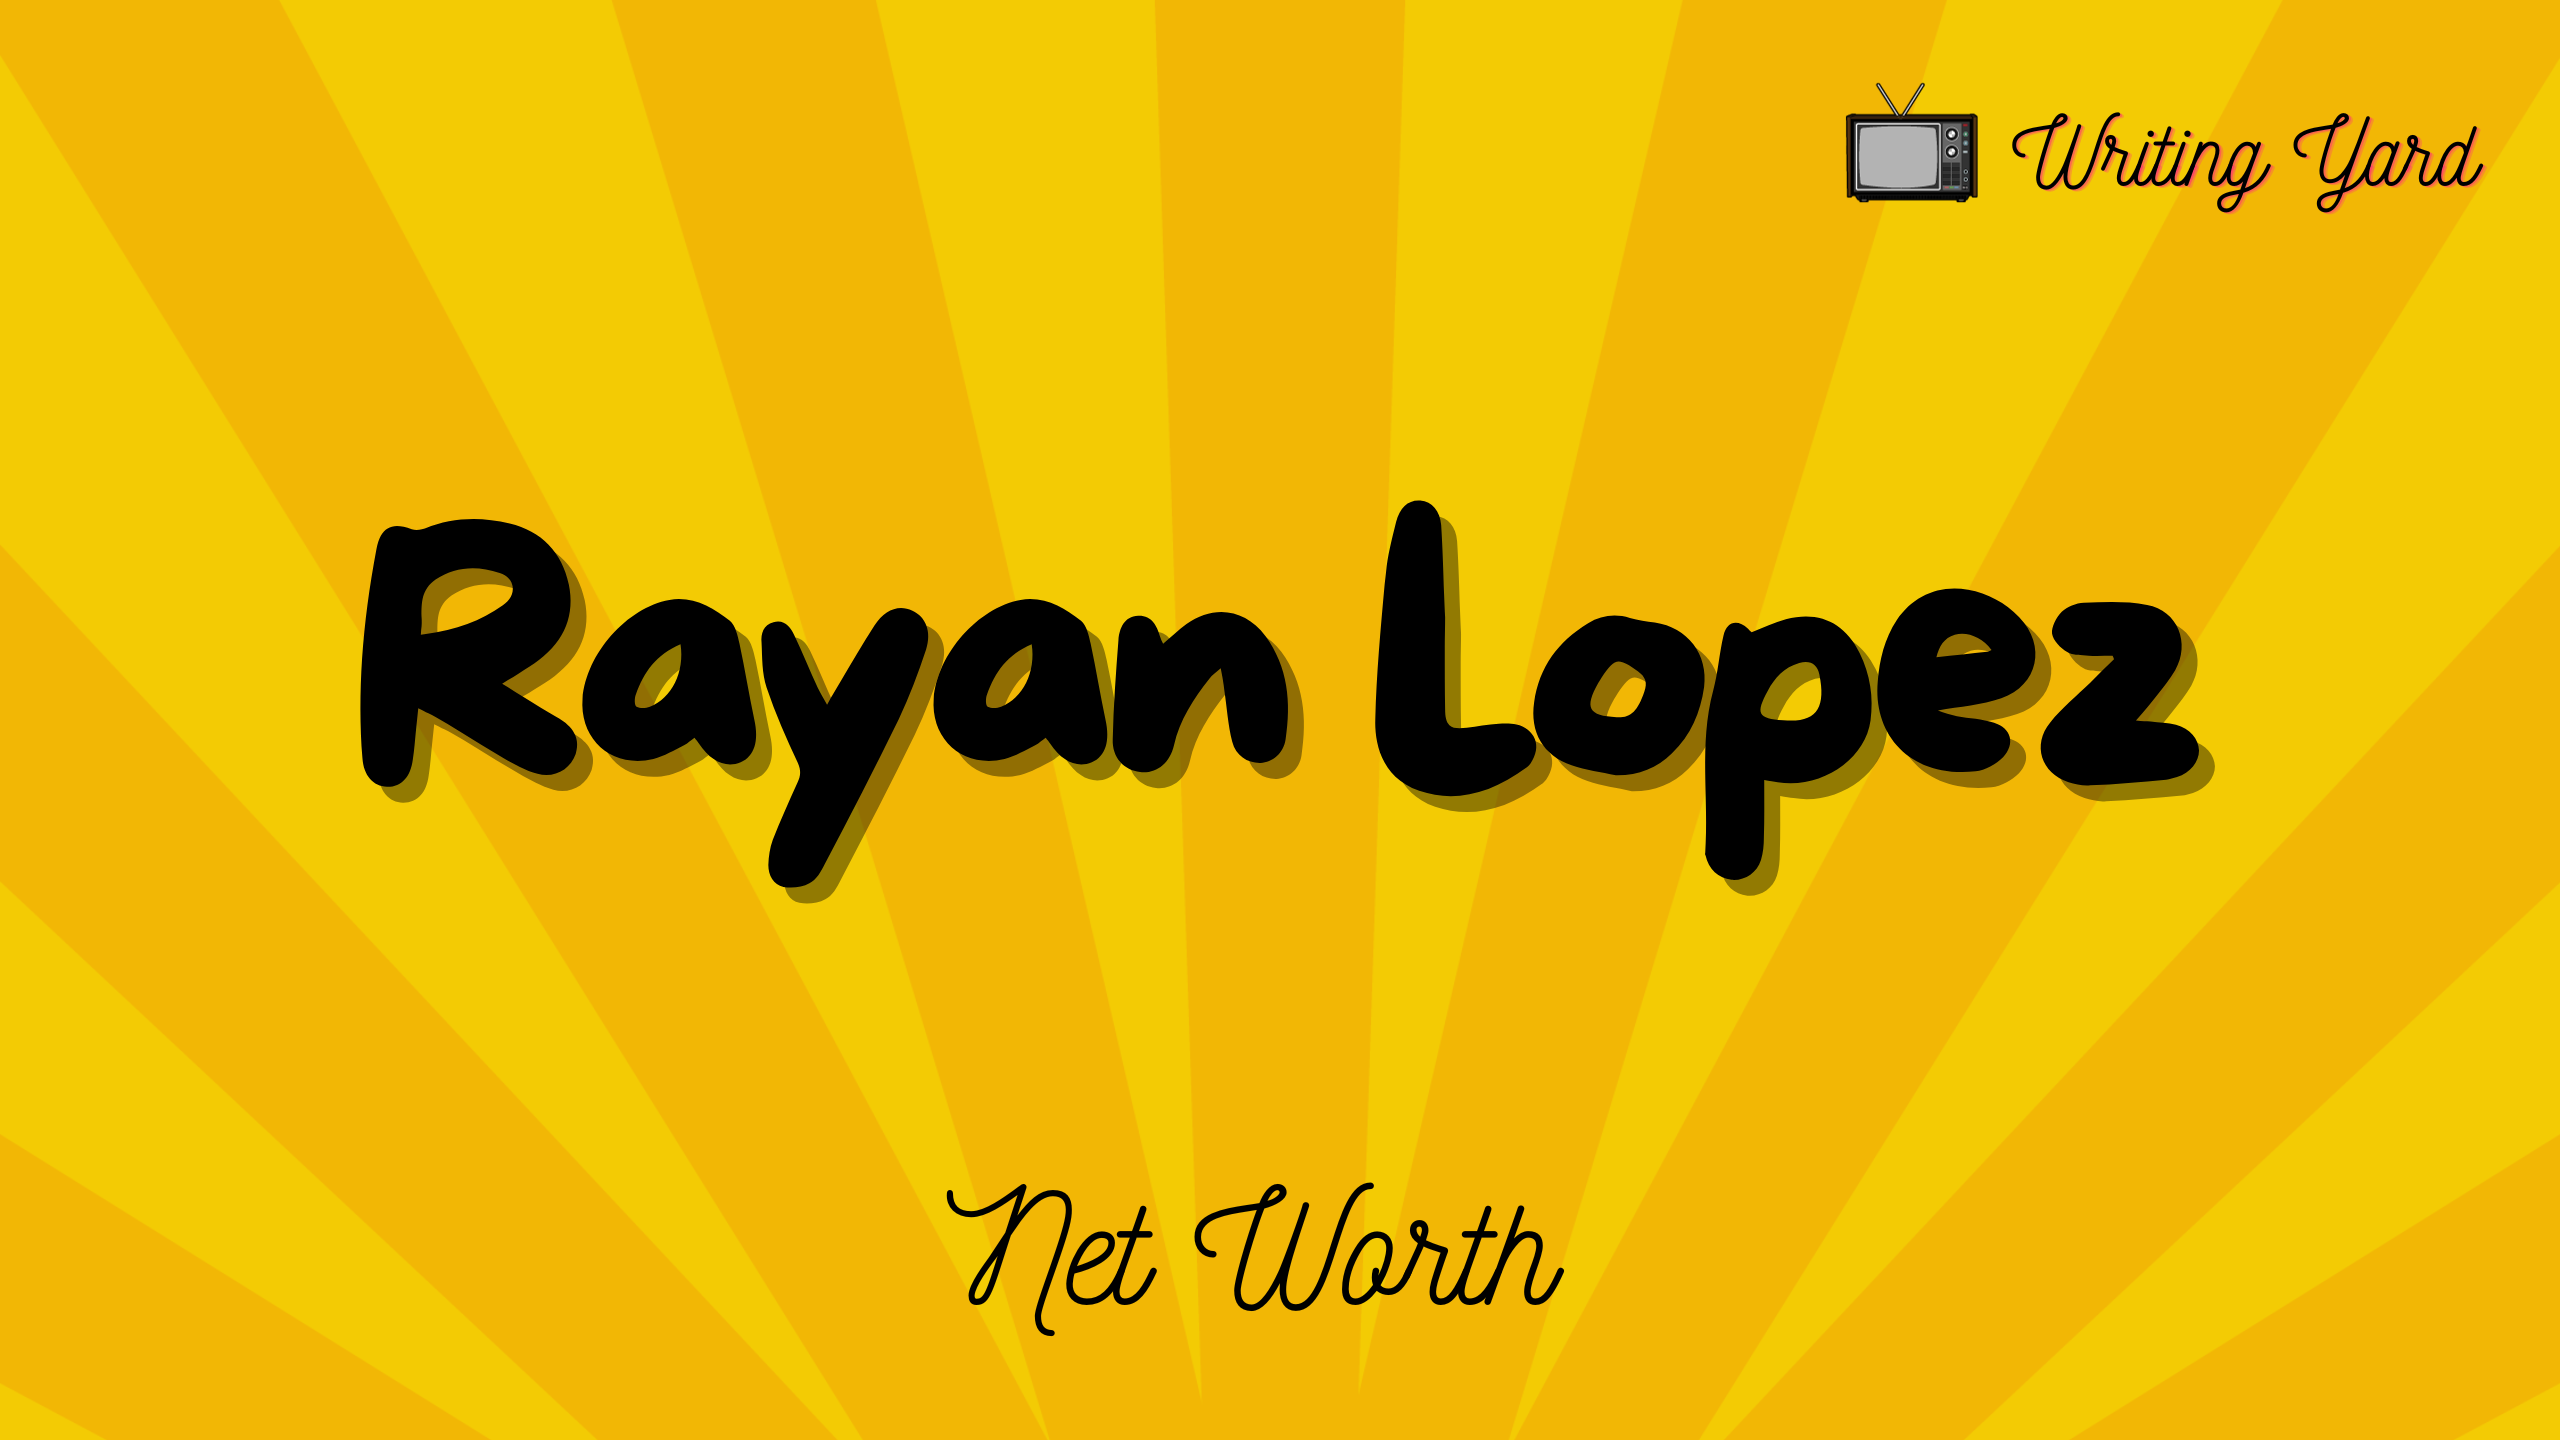 Rayan Lopez Net Worth